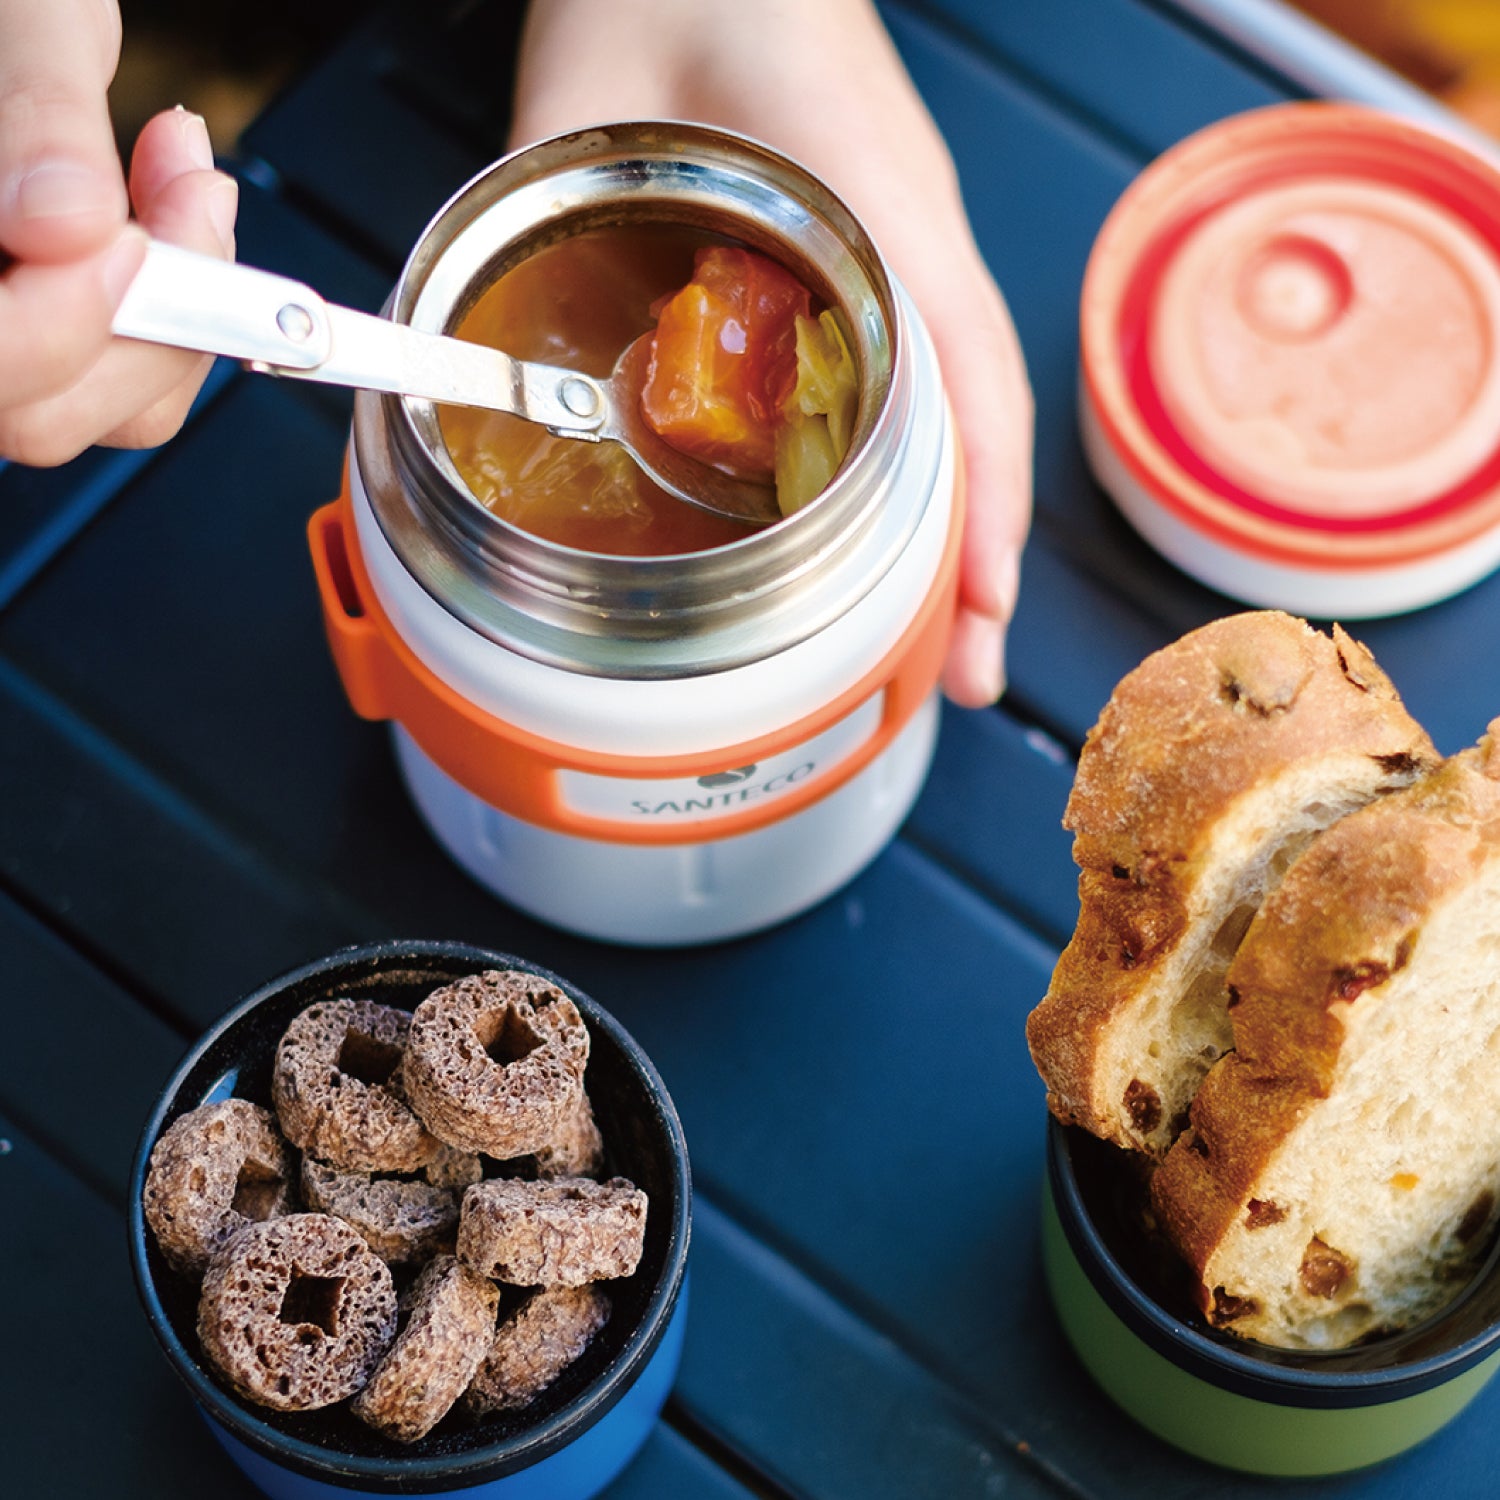 SANTECO Koge Thermal Food Jar with Spoon, 17 oz, Stainless Steel, Vacuum Insulated, Milk White